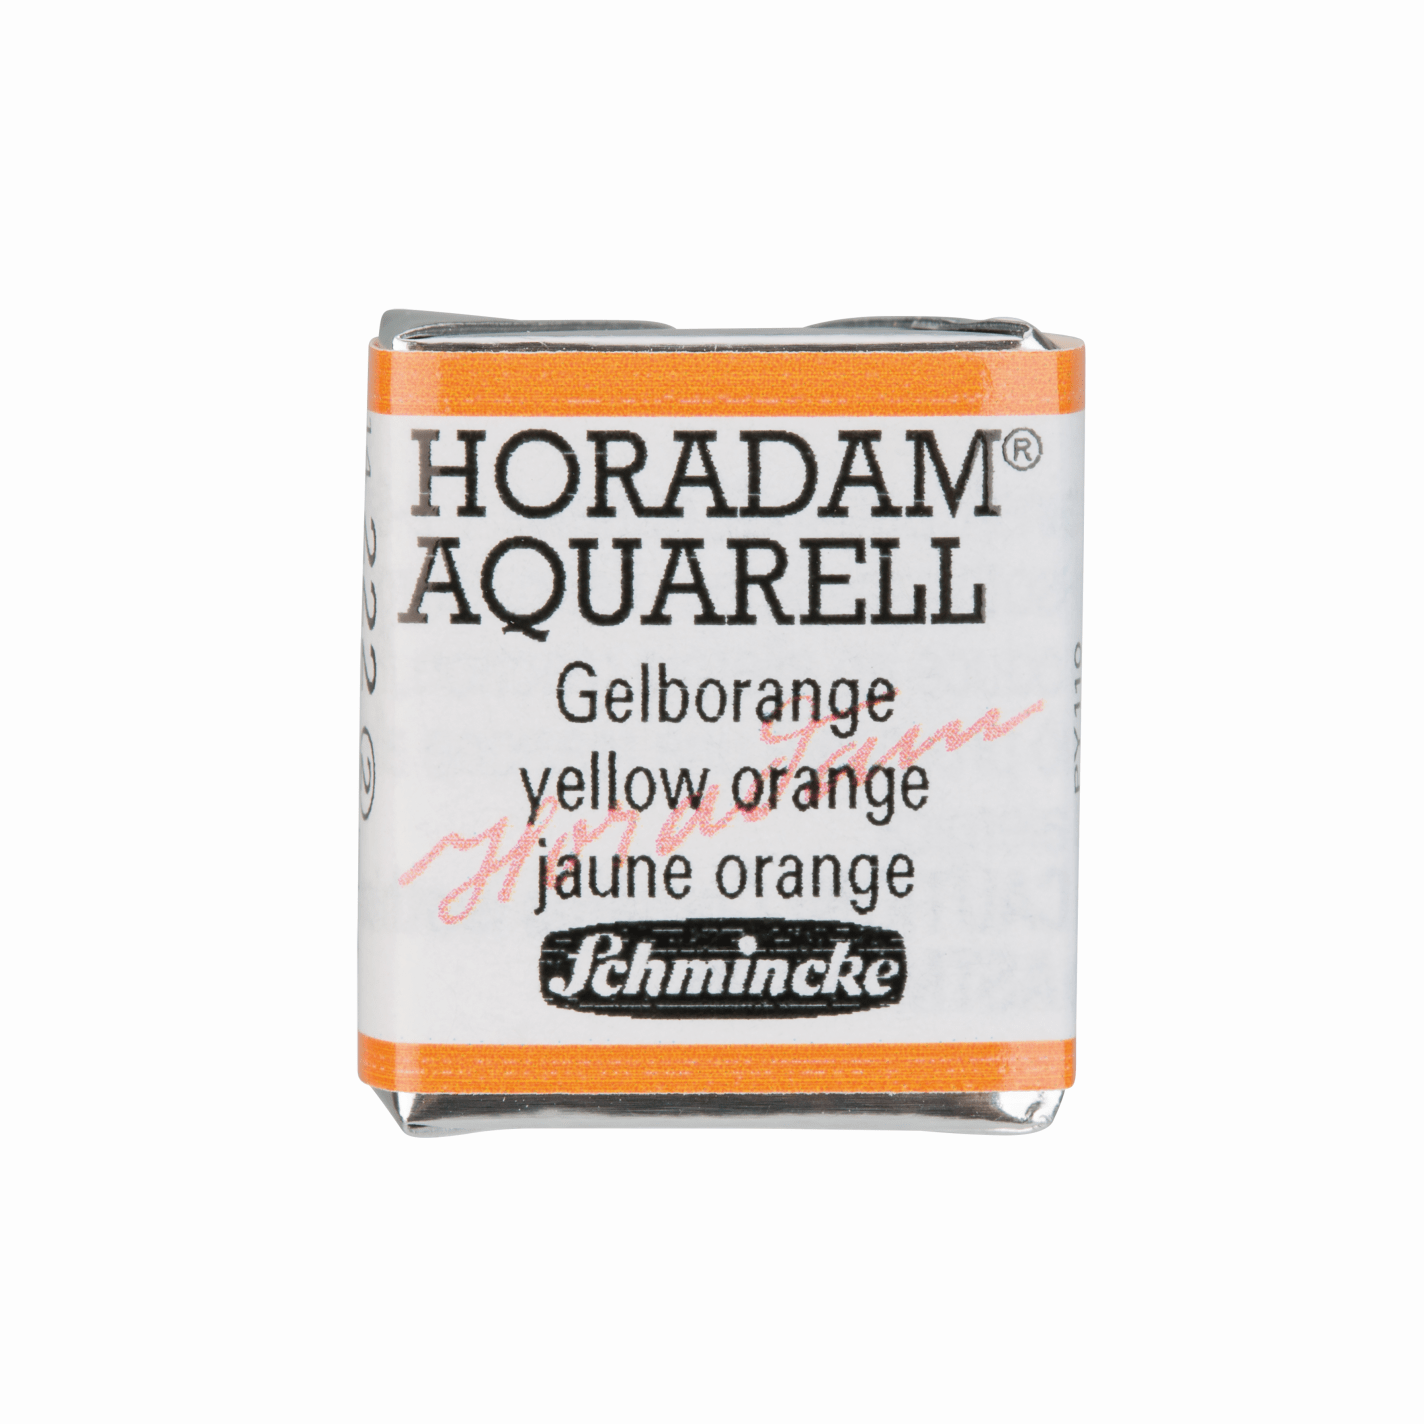 Schmincke Horadam Aquarell pans 1/2 pan Yellow Orange